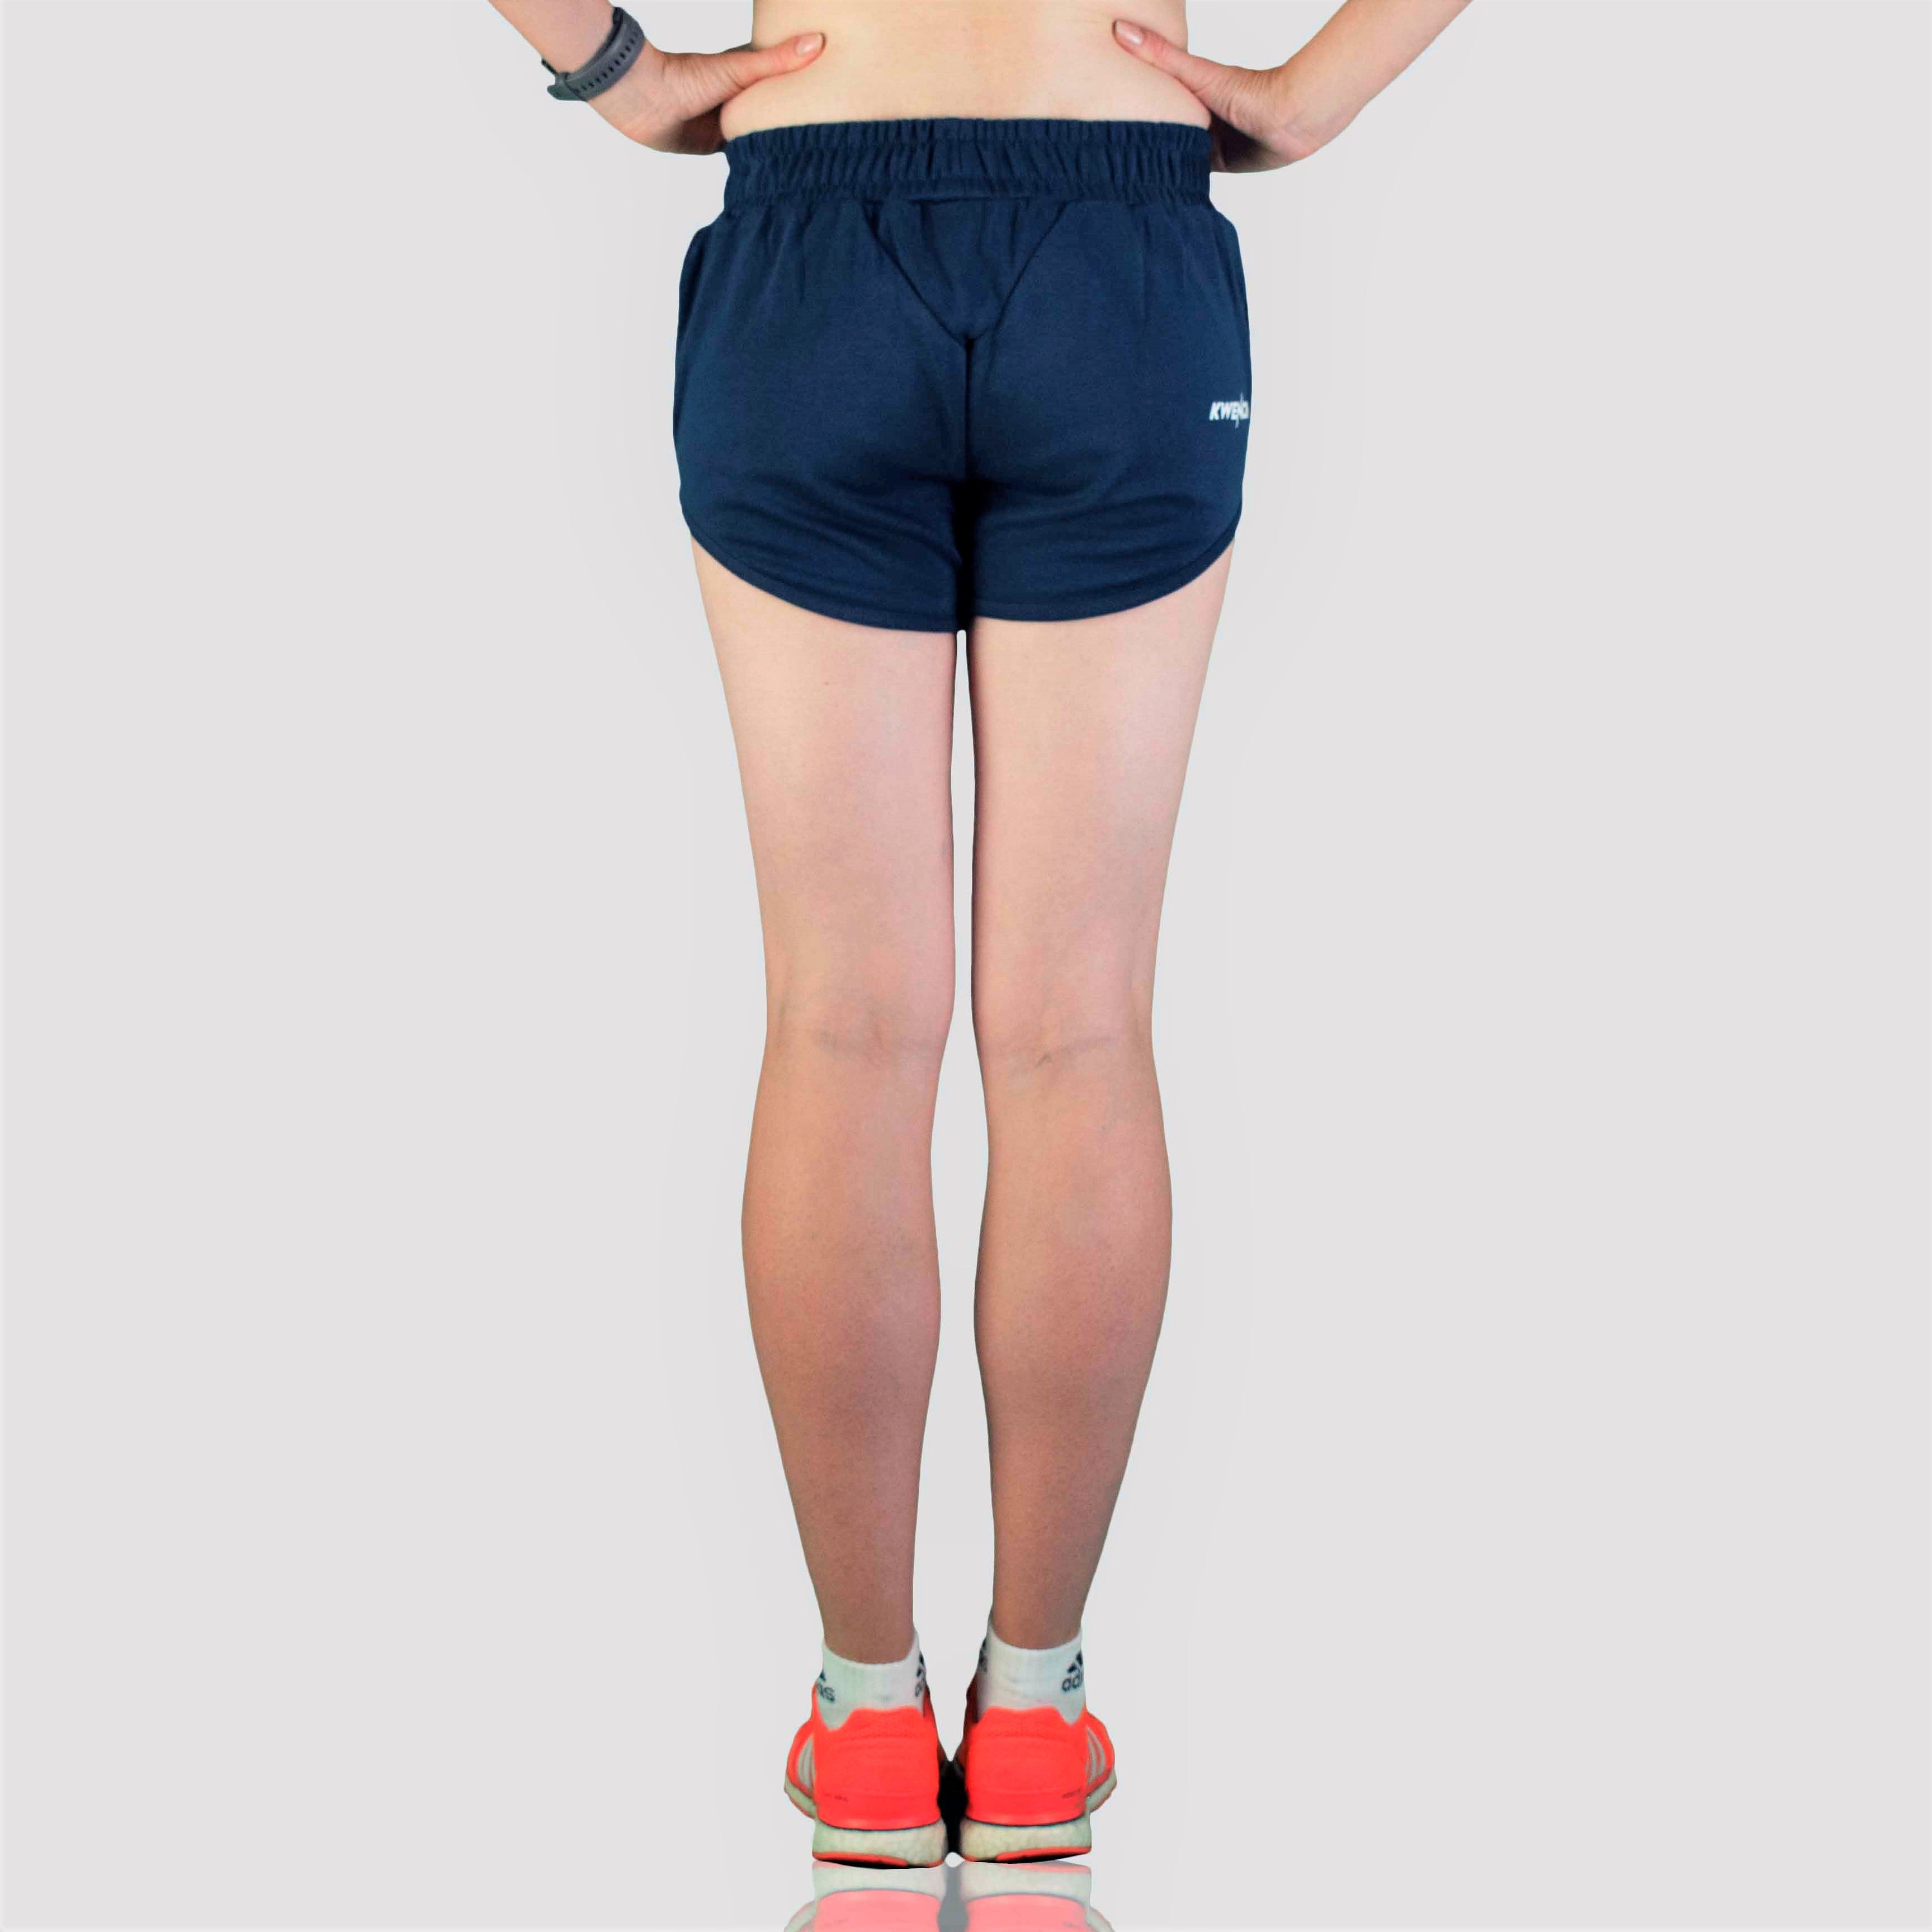 Kwench Womens gymshark shorts running fitness yoga athletic sports 